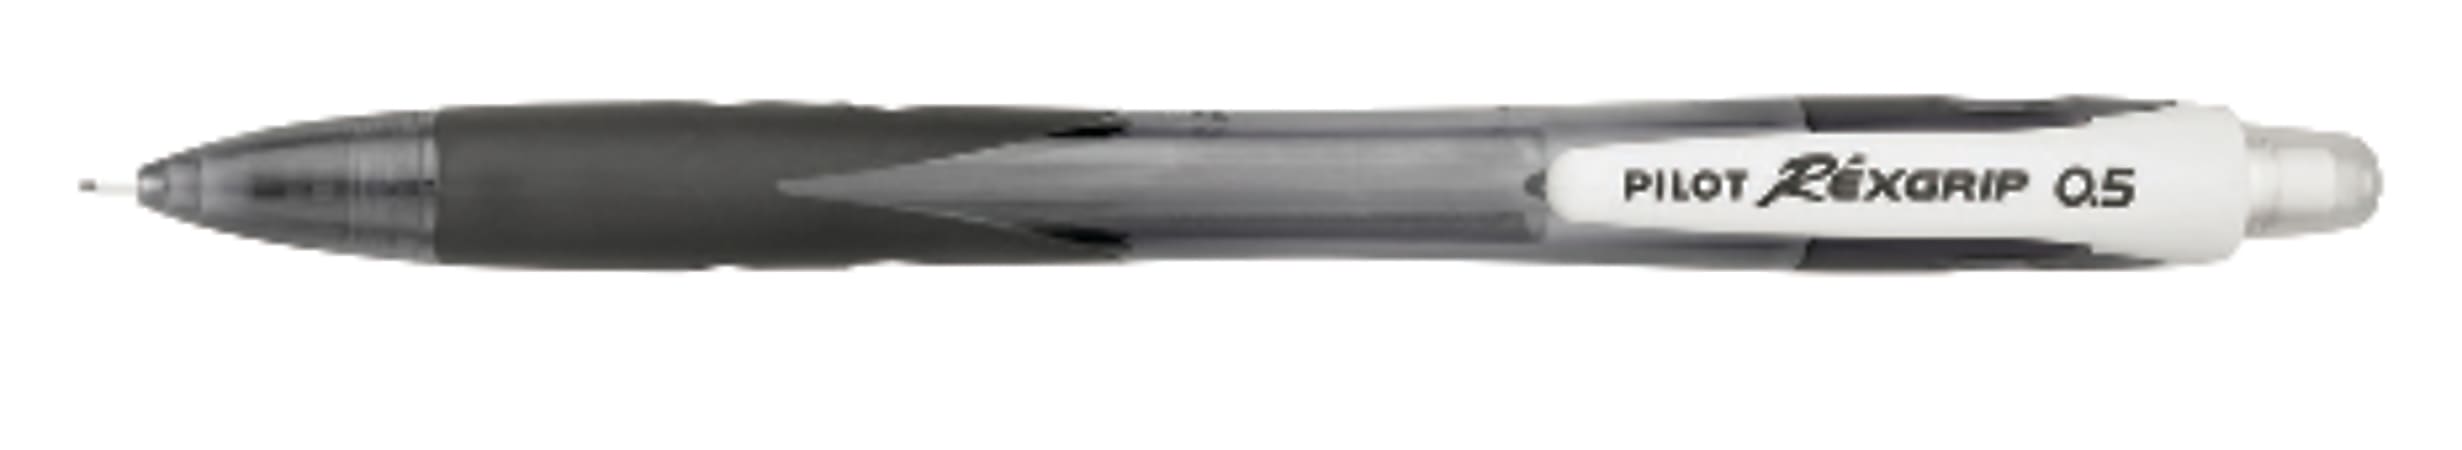 Pilot® Rexgrip BeGreen Mechanical Pencil, 0.5 mm, HB Hardness, 71% Recycled, Black